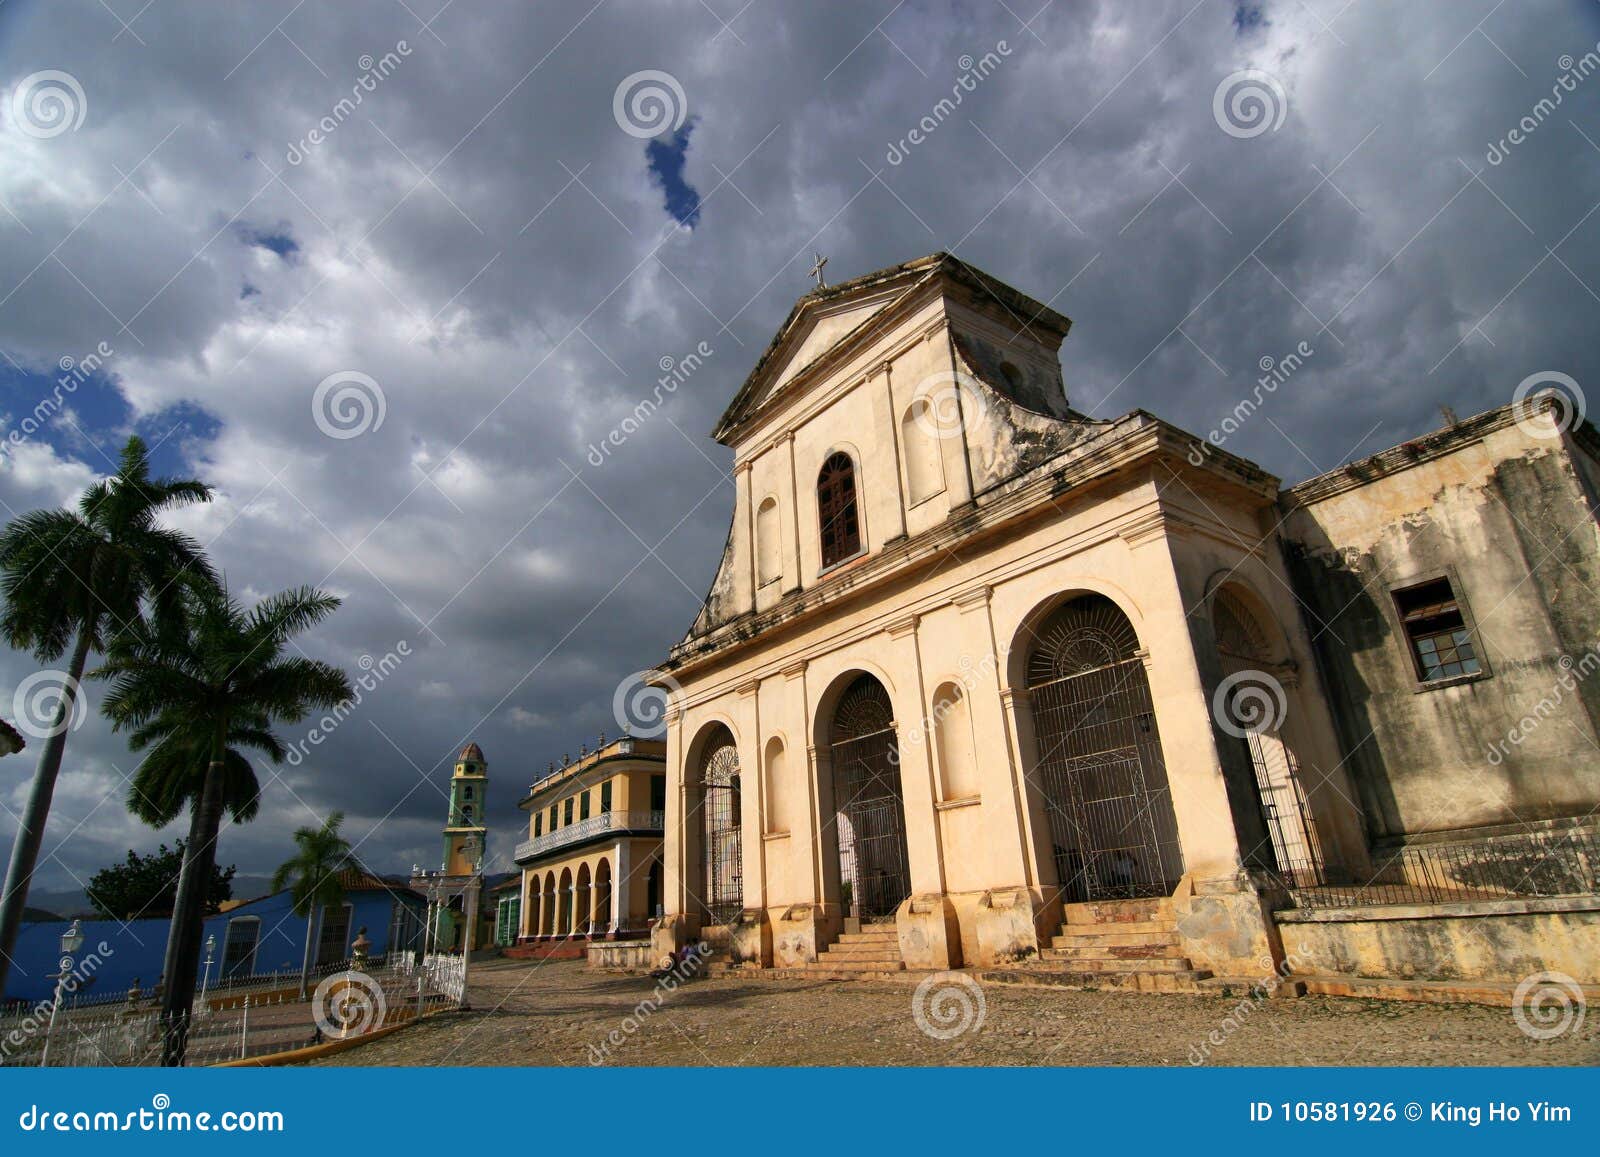 santisima trinidad church, trinidad, cuba